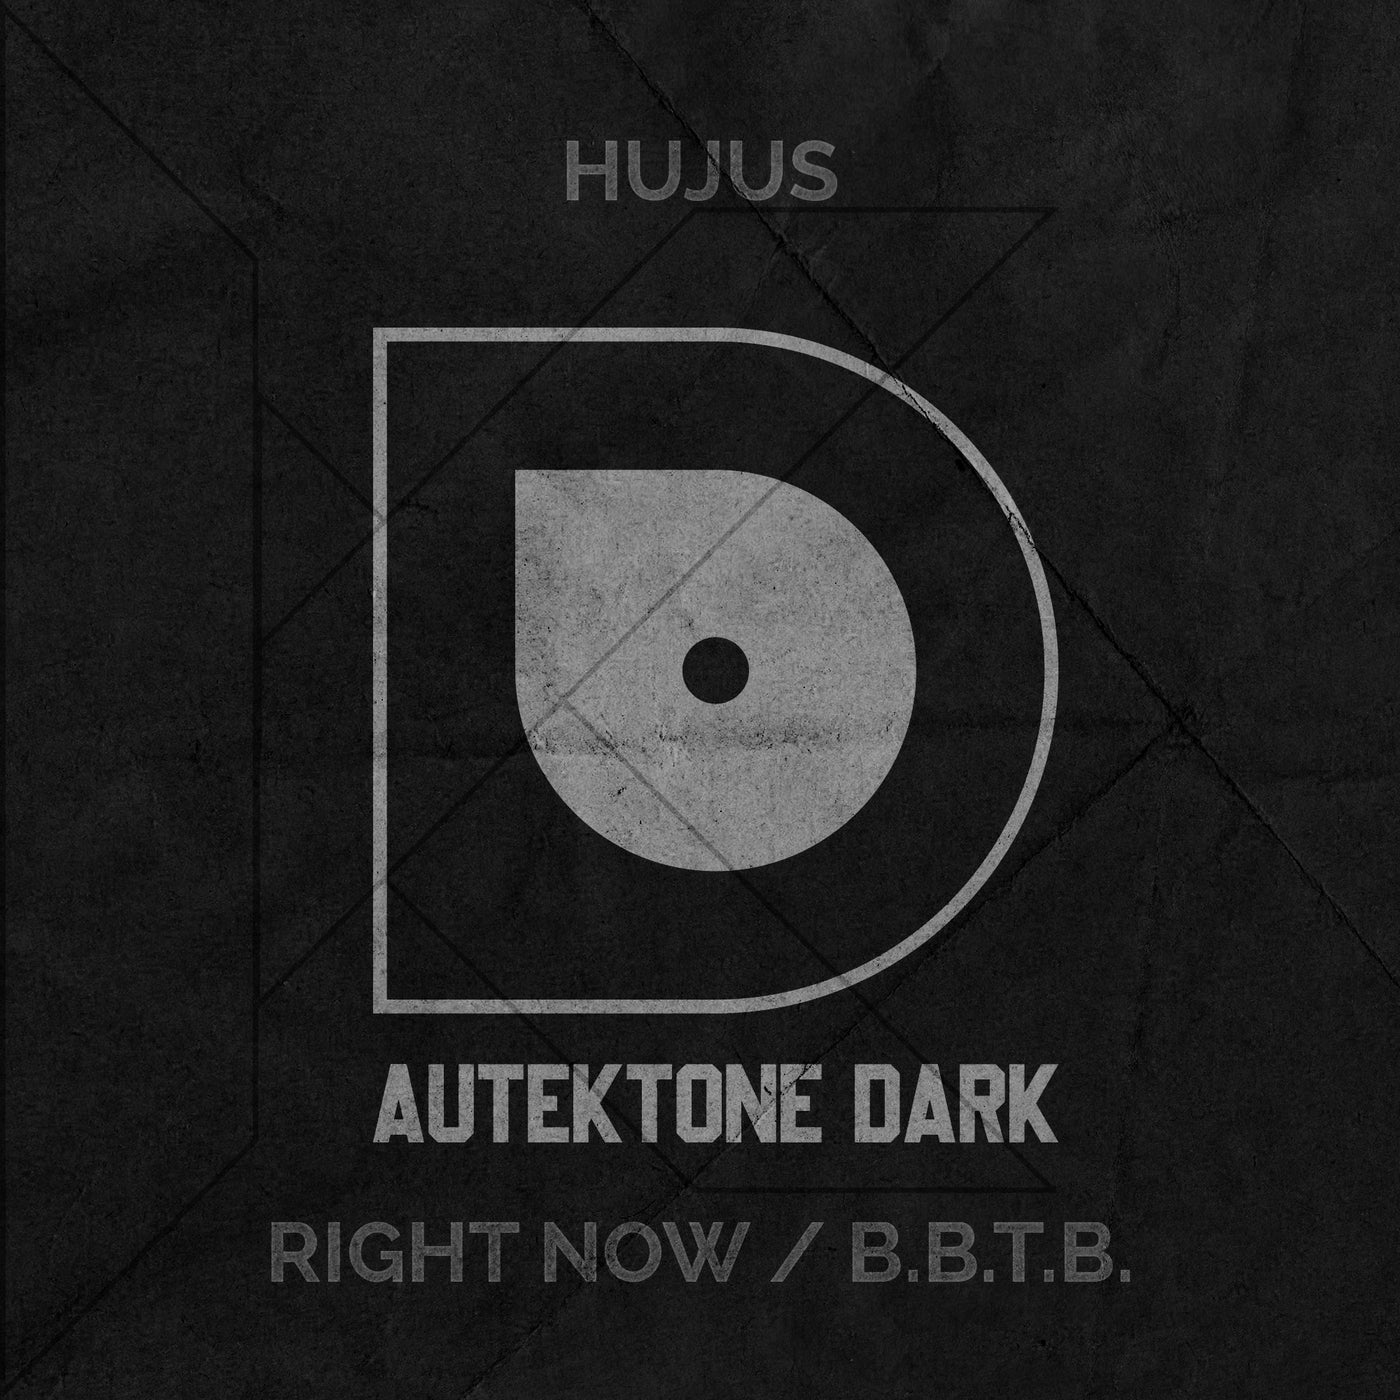 HUJUS - Right Now , B.B.T.B. [AUTEKTONE DARK]